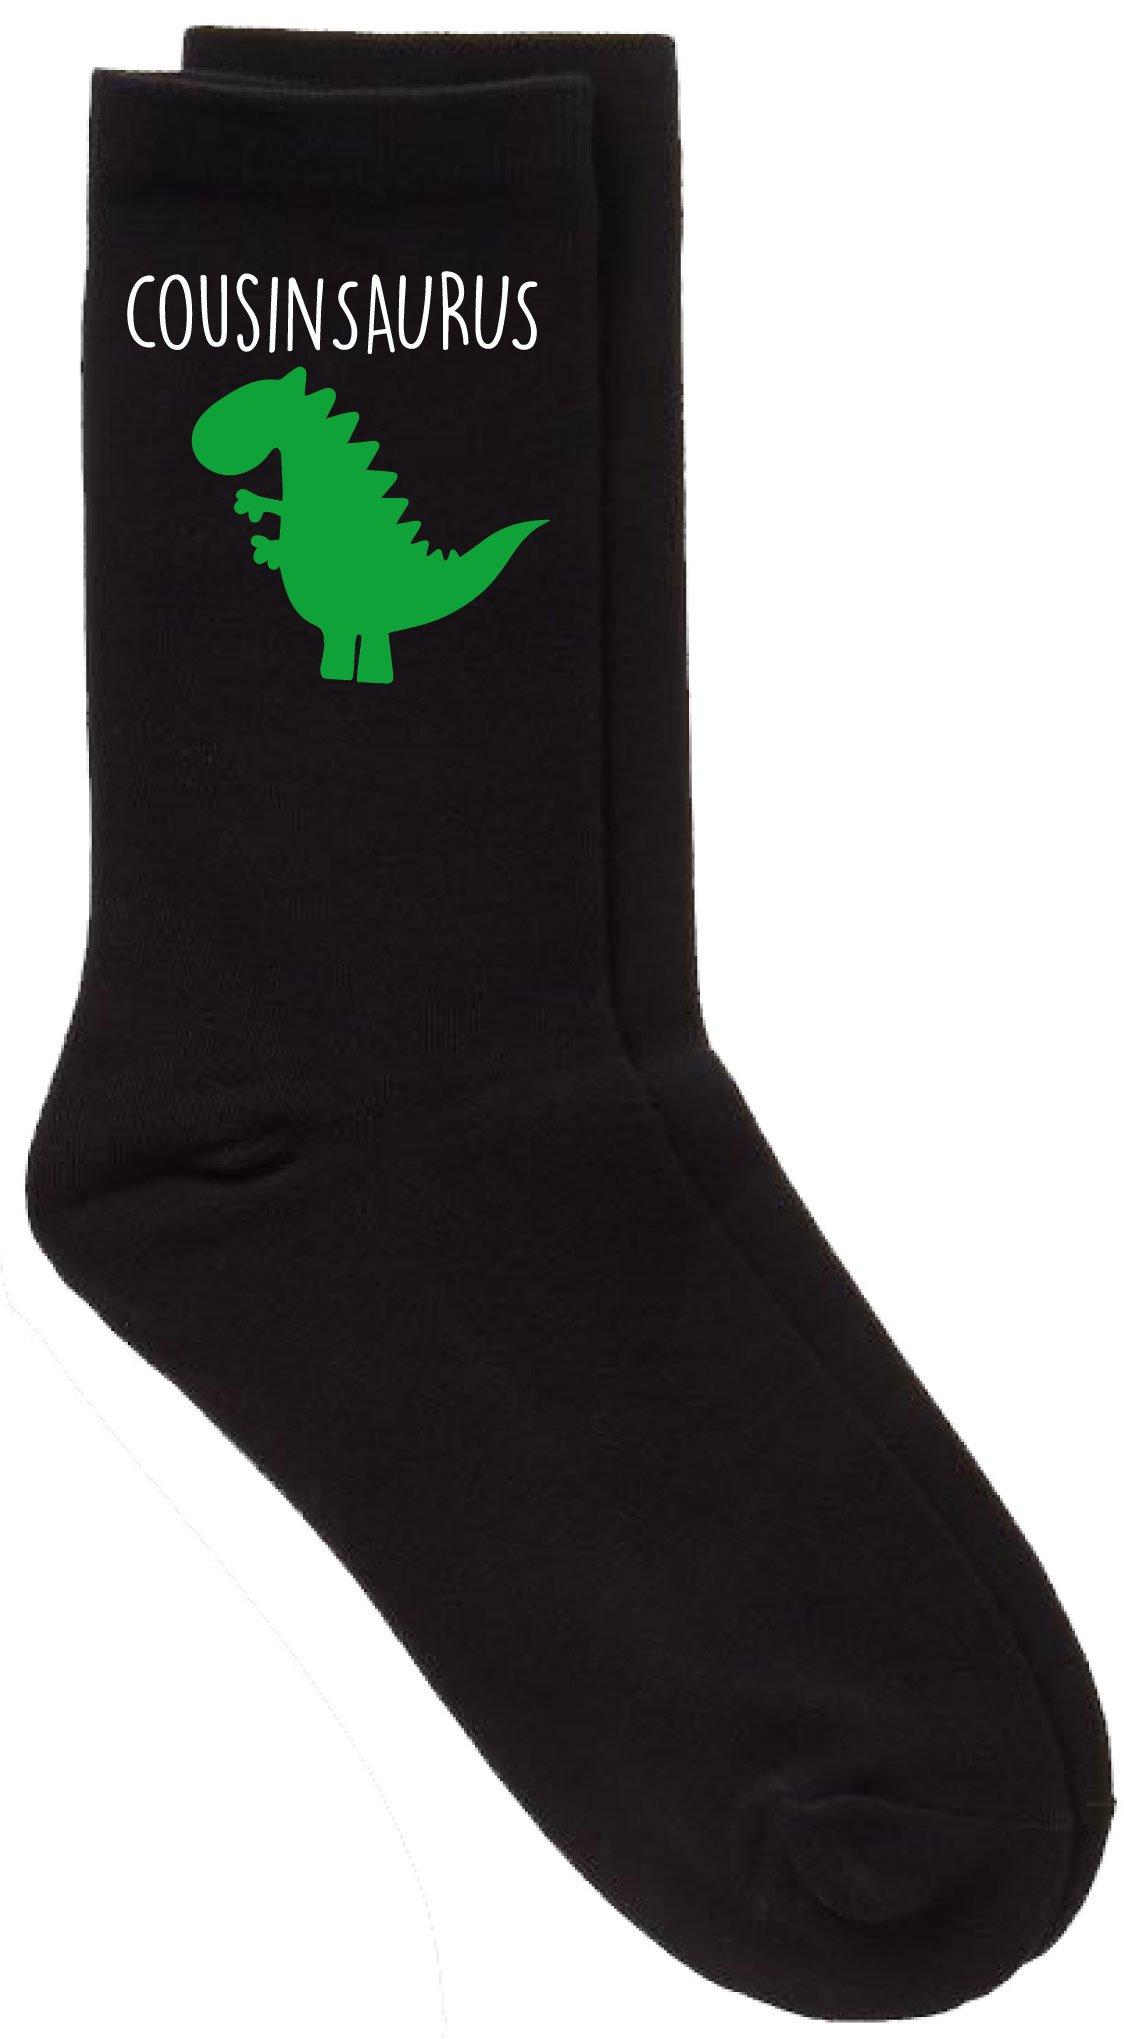 Cousin Dinosaur Cousinsaurus Black Calf Socks